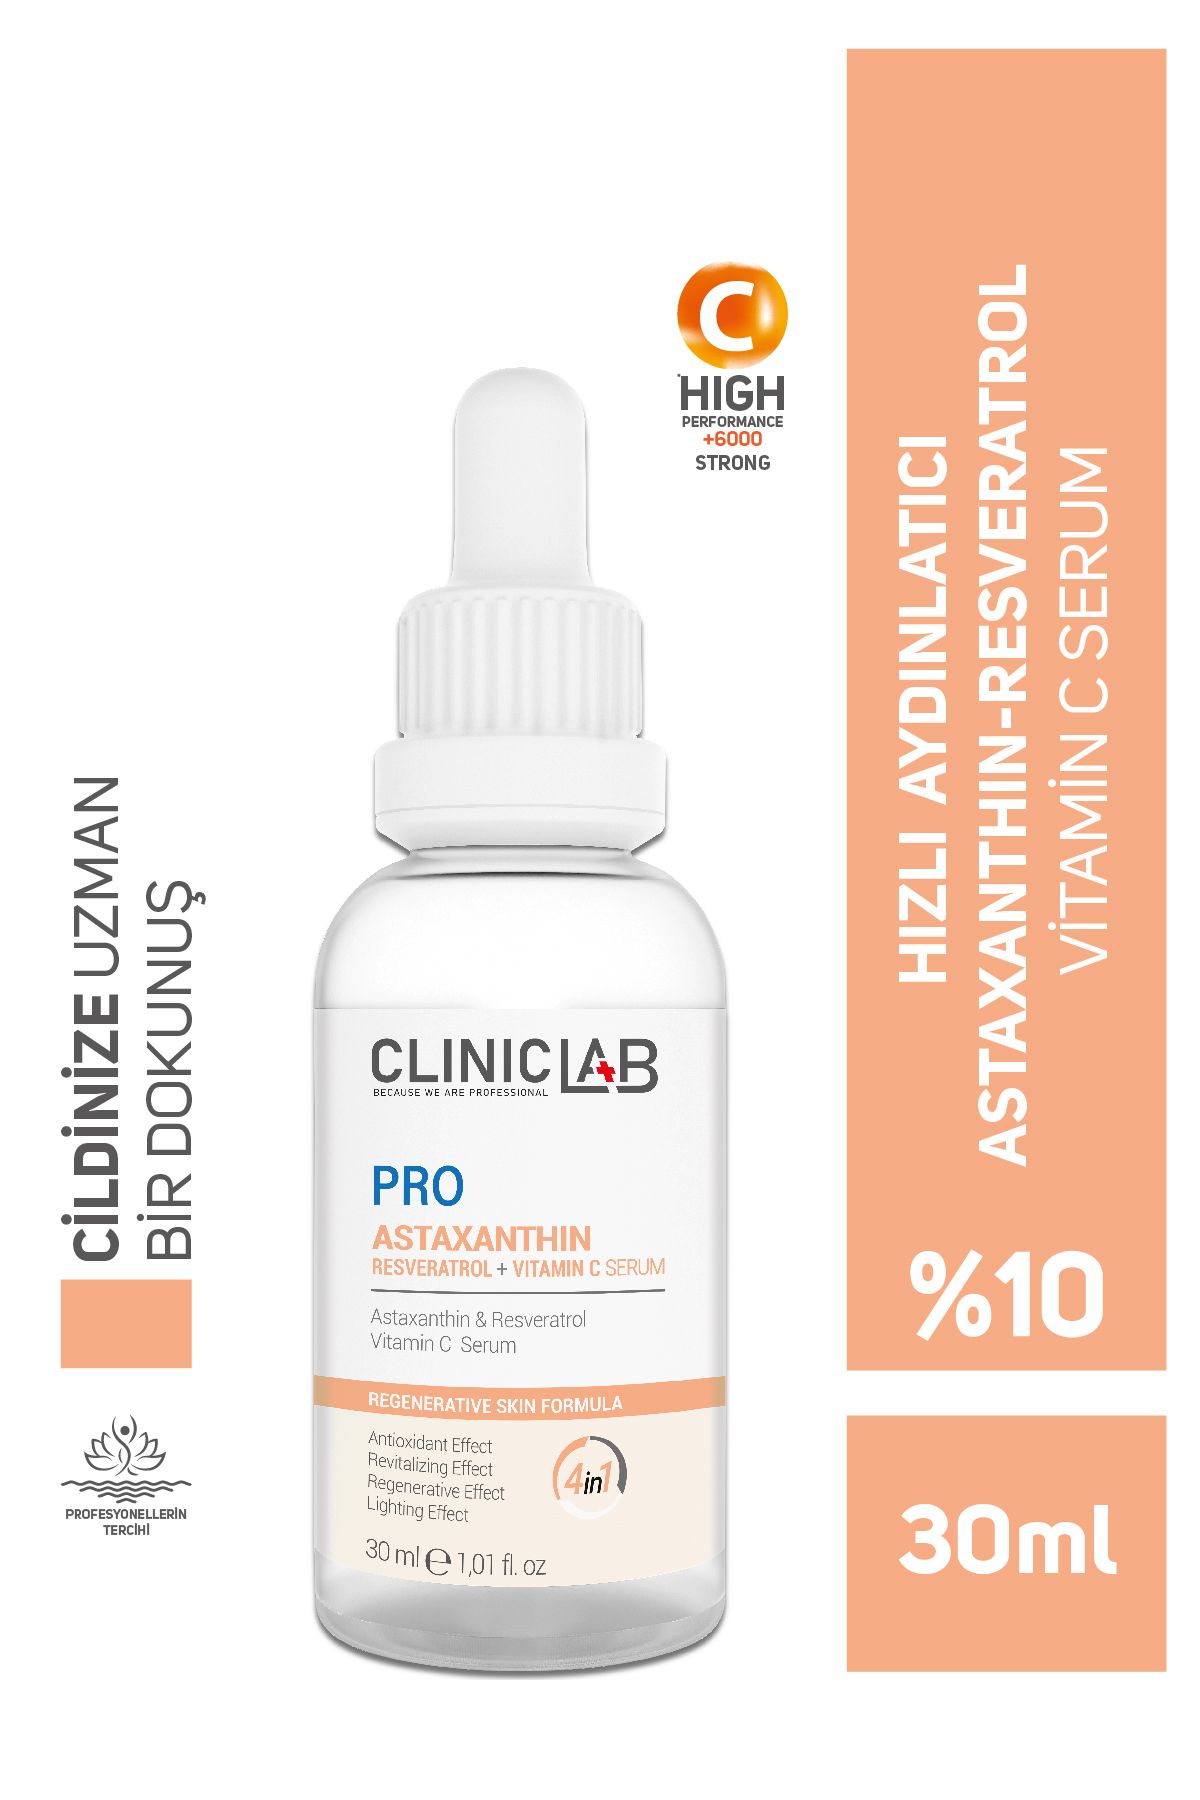 Cliniclab Pro Astaxanthin & Resveratrol Vitamin C Serum 30ml